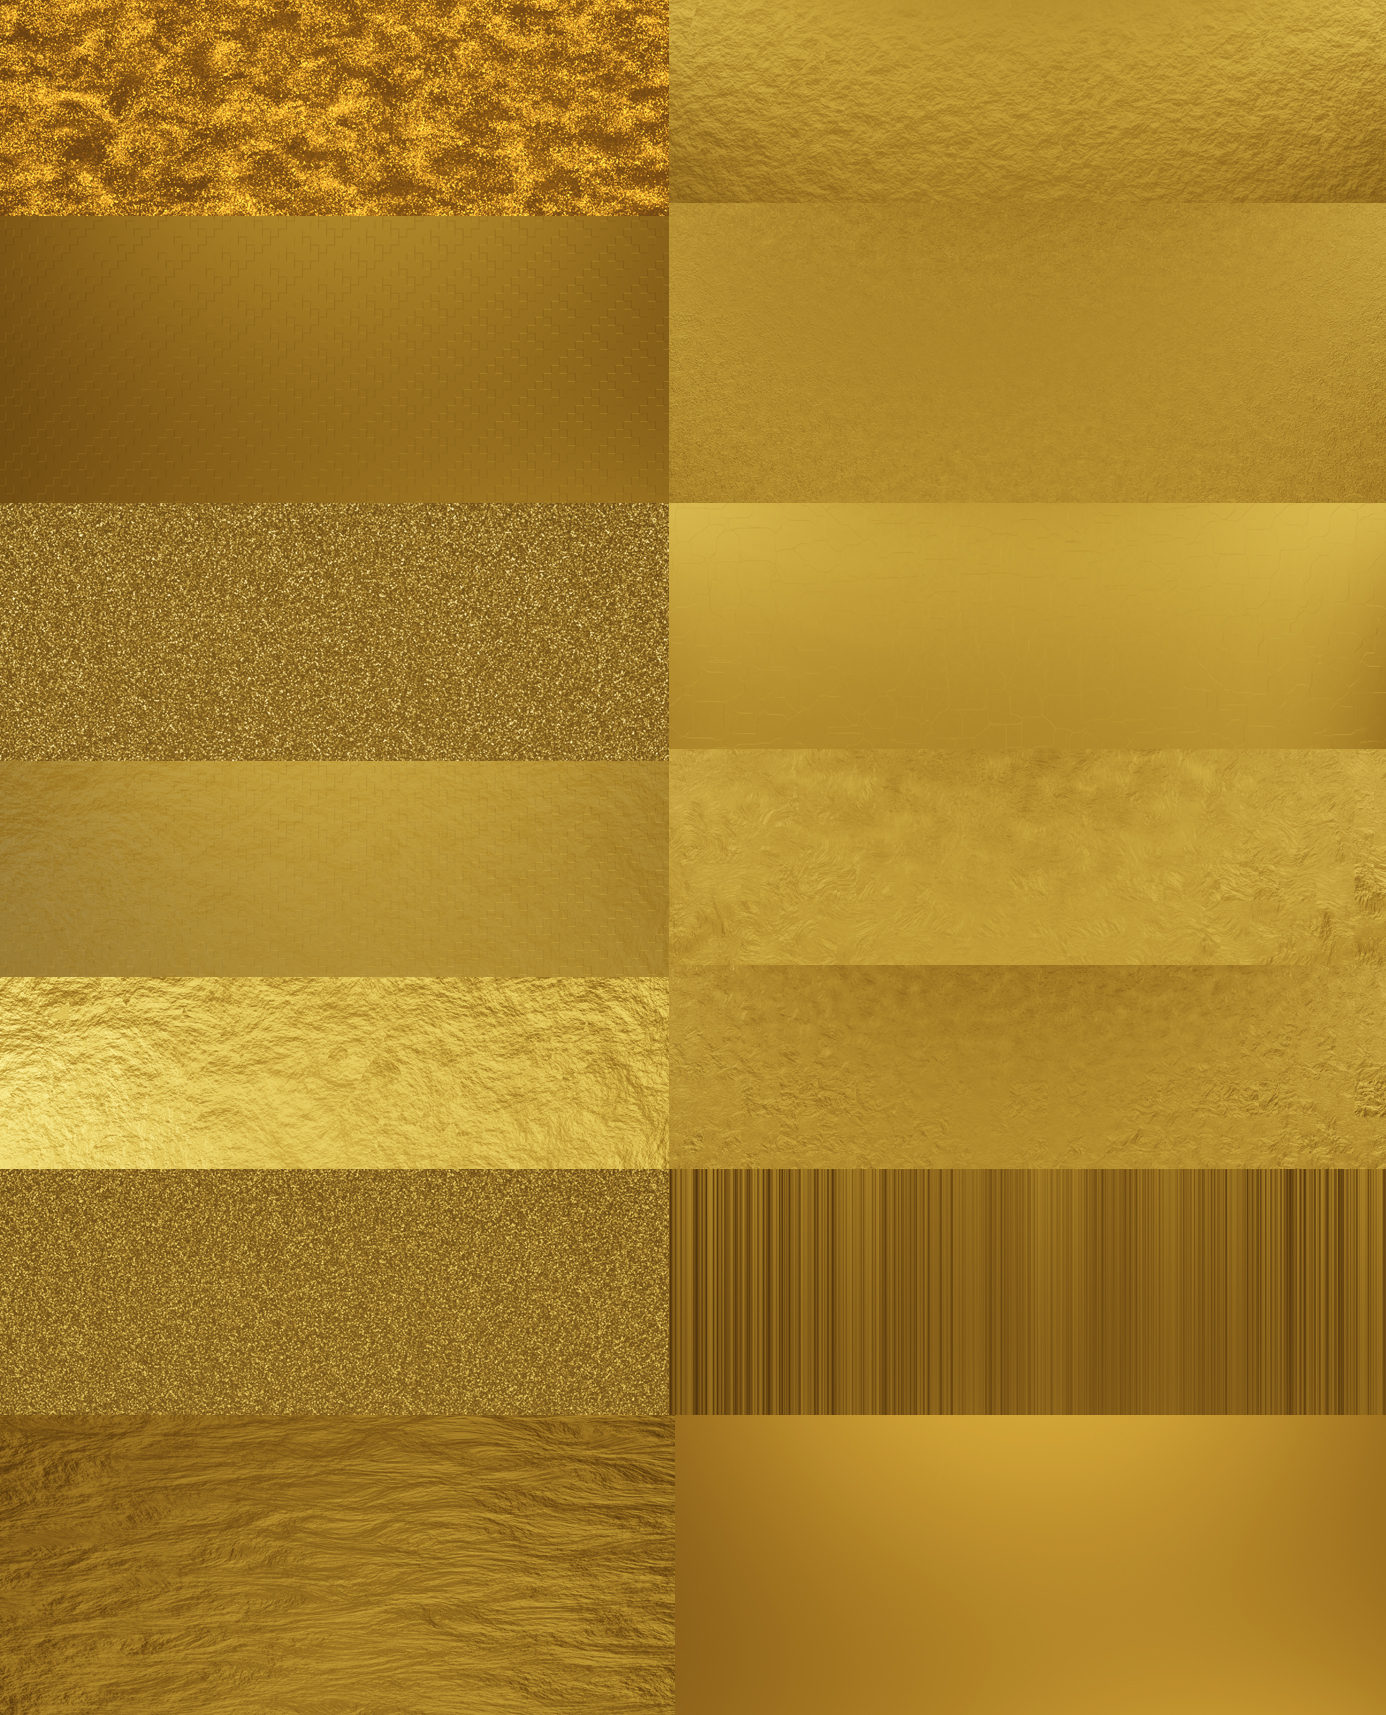 14 Free Gold Foil Background Images for Download - VFXMAXIMUM